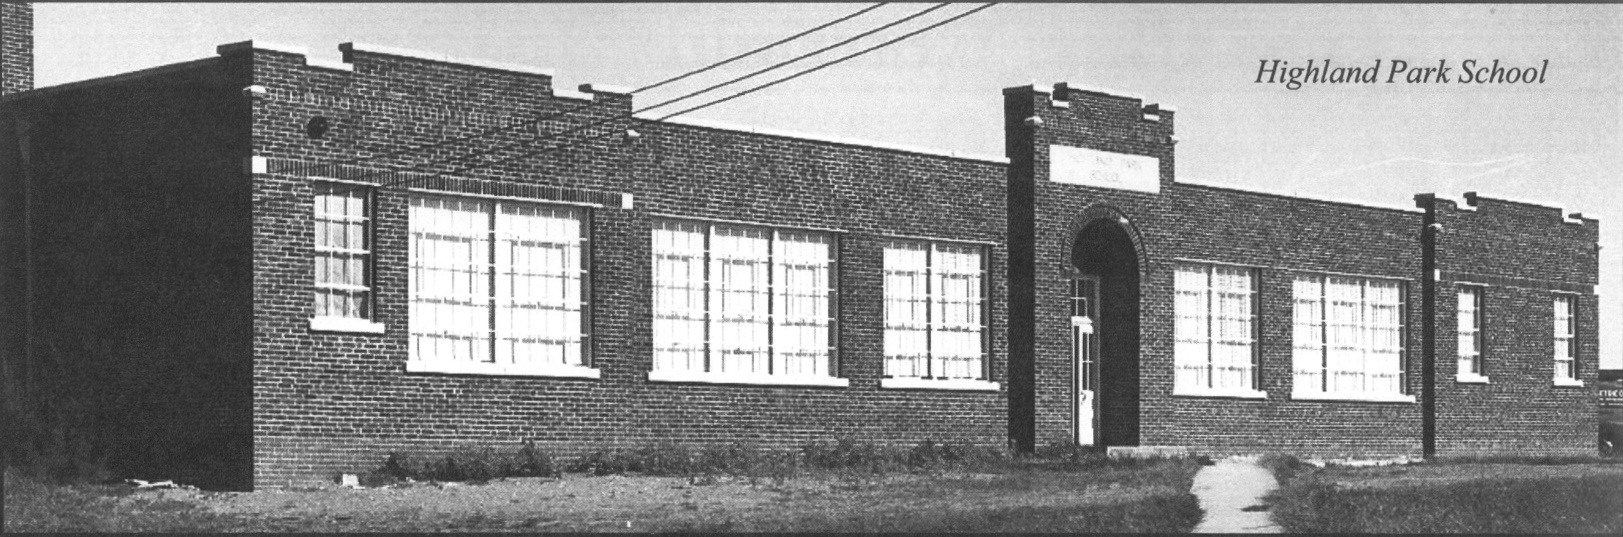 1920s Building